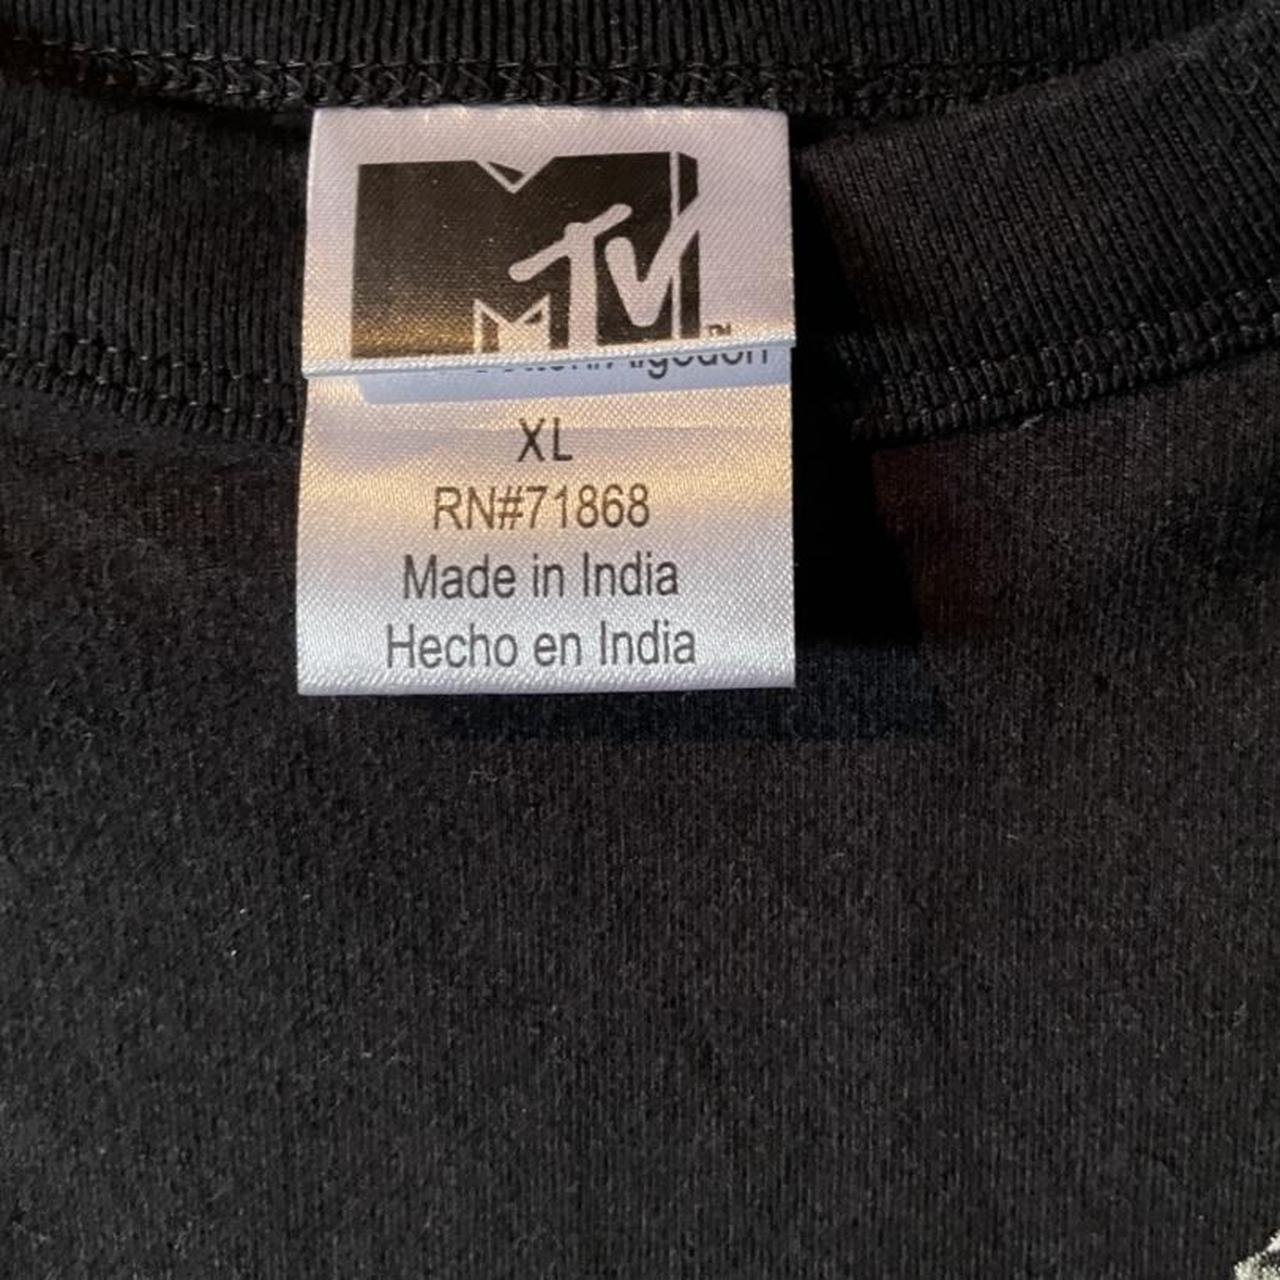 Product Image 2 - mtv astronaut sweatshirt!
never worn
size: XL